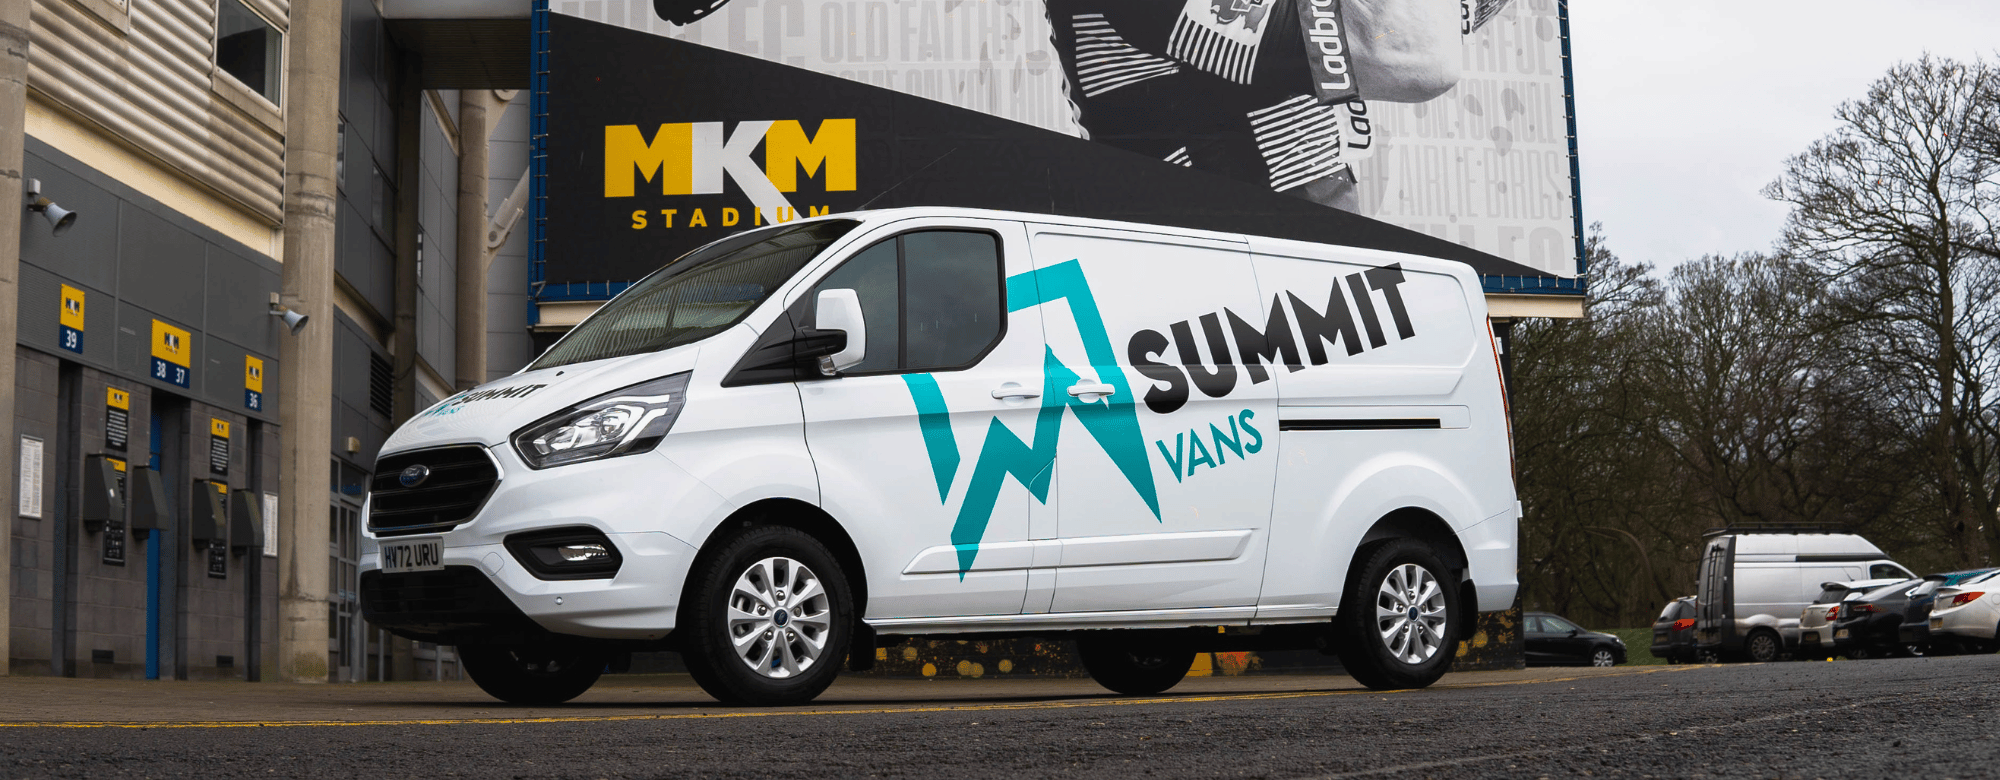 <strong>Summit Vans Become New Associate Partner</strong>